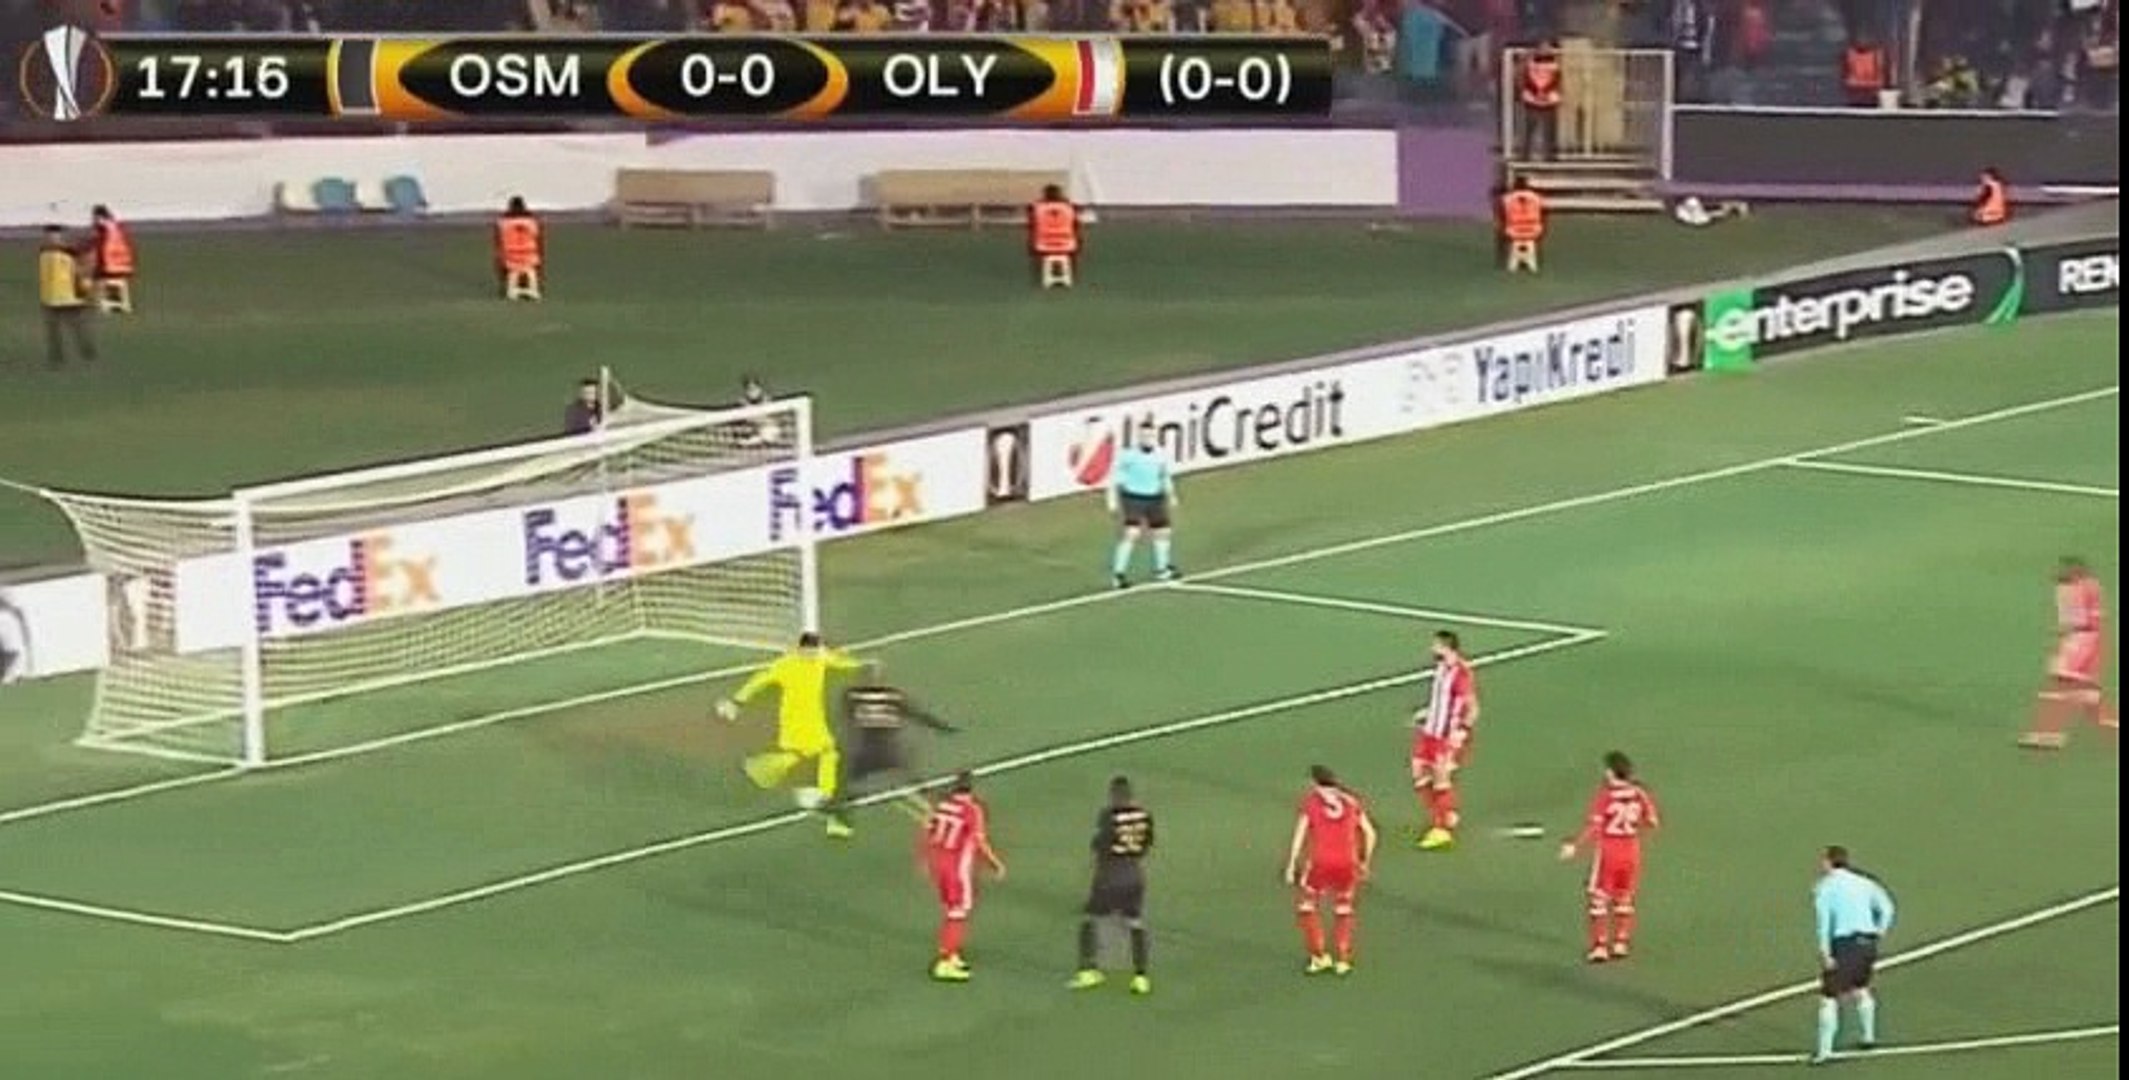 Osmanlispor vs Olympiakos 0 3 All Goals & Highlights 23 02 2017 HD - فيديو  Dailymotion